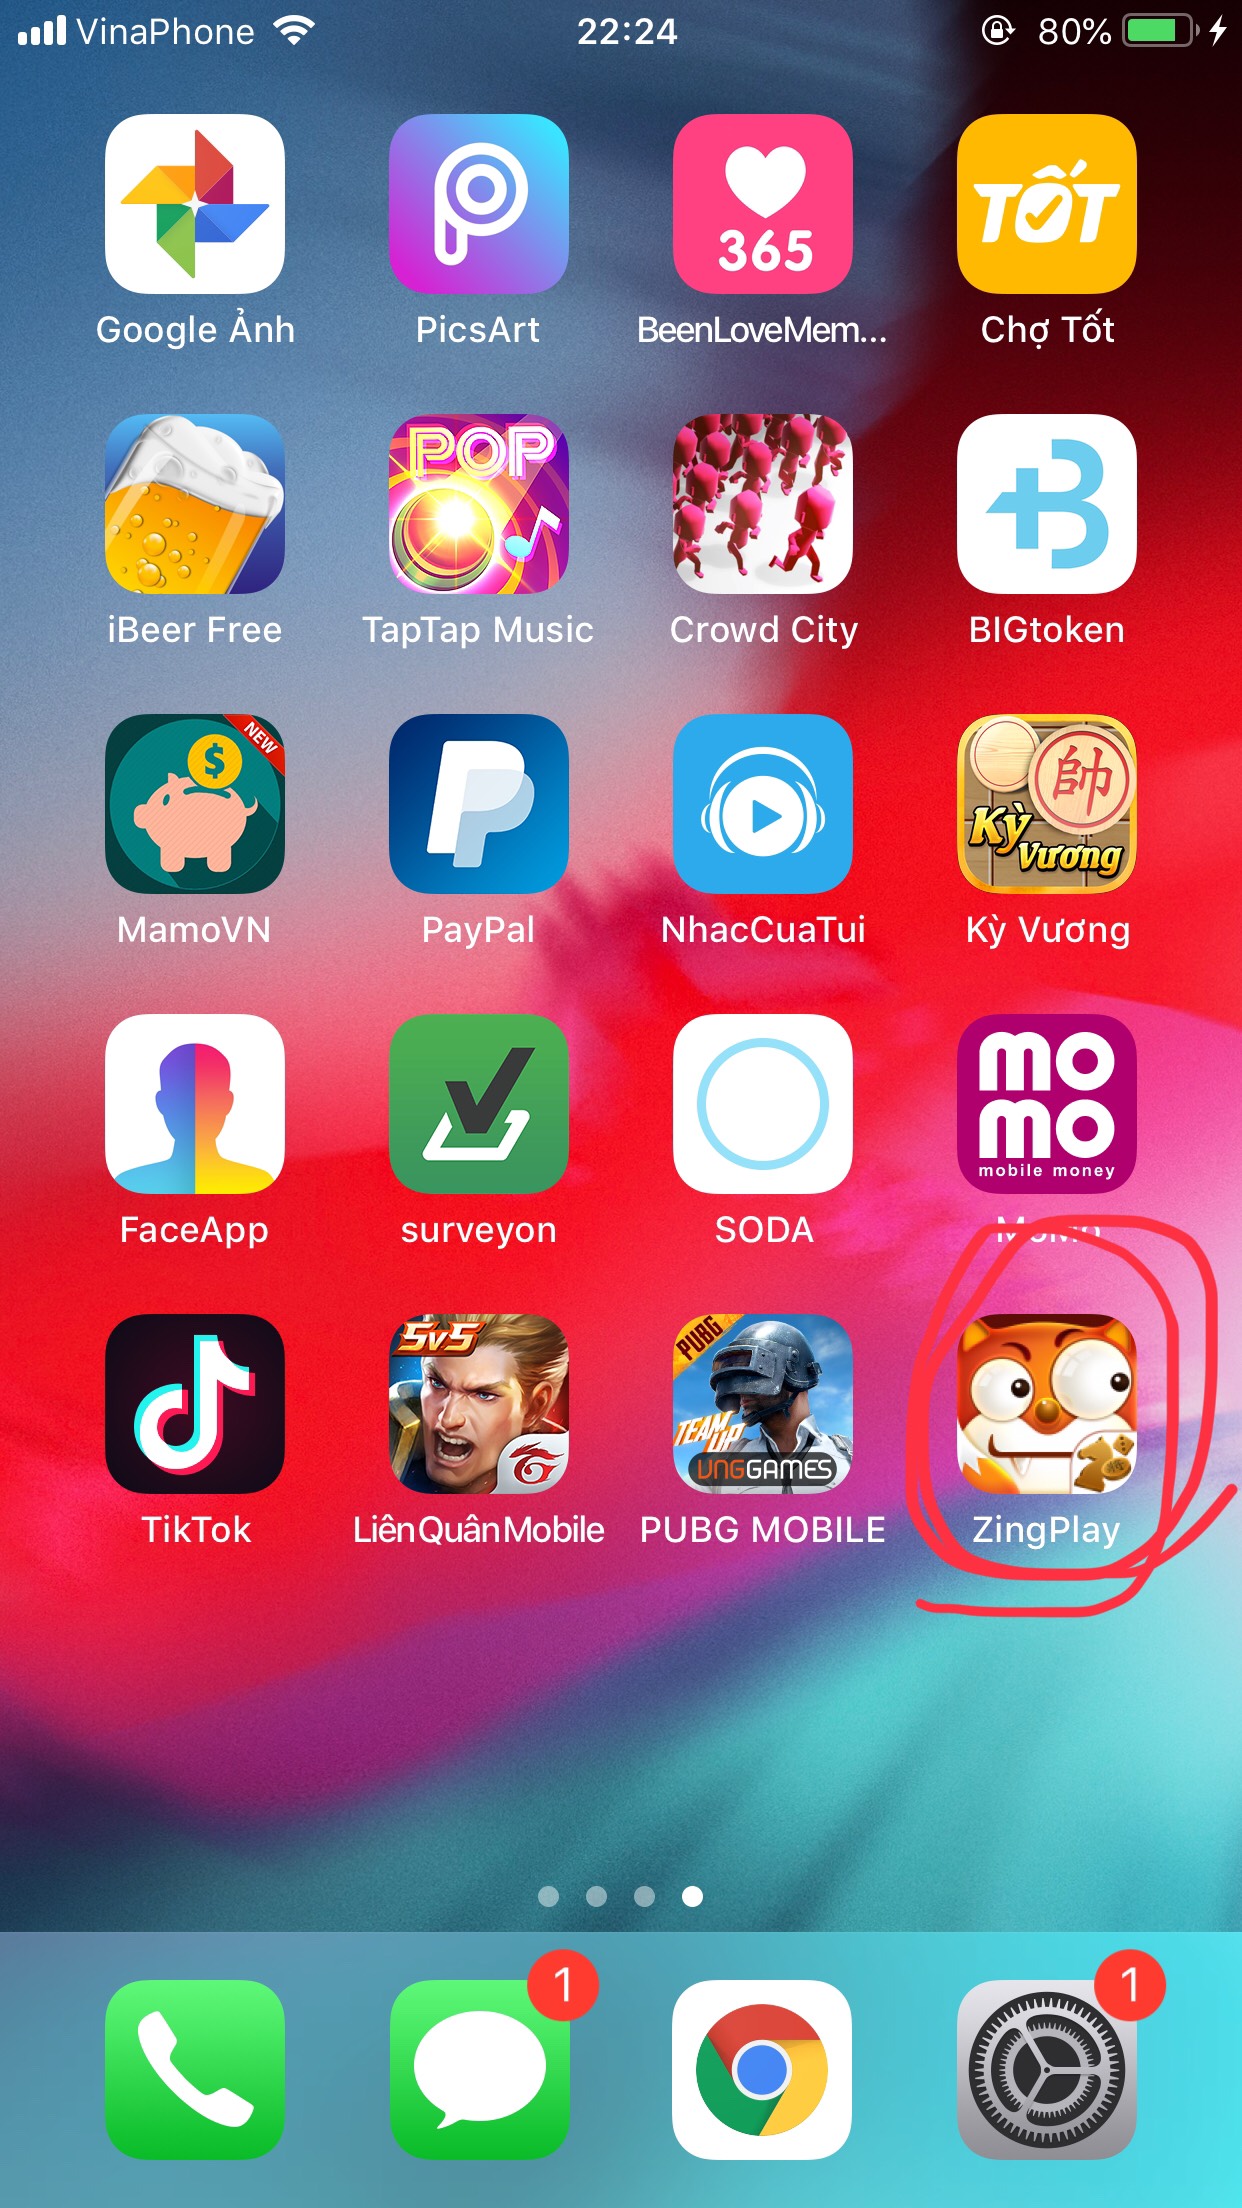 ZingPlay - Tiến lên - iCa on the App Store